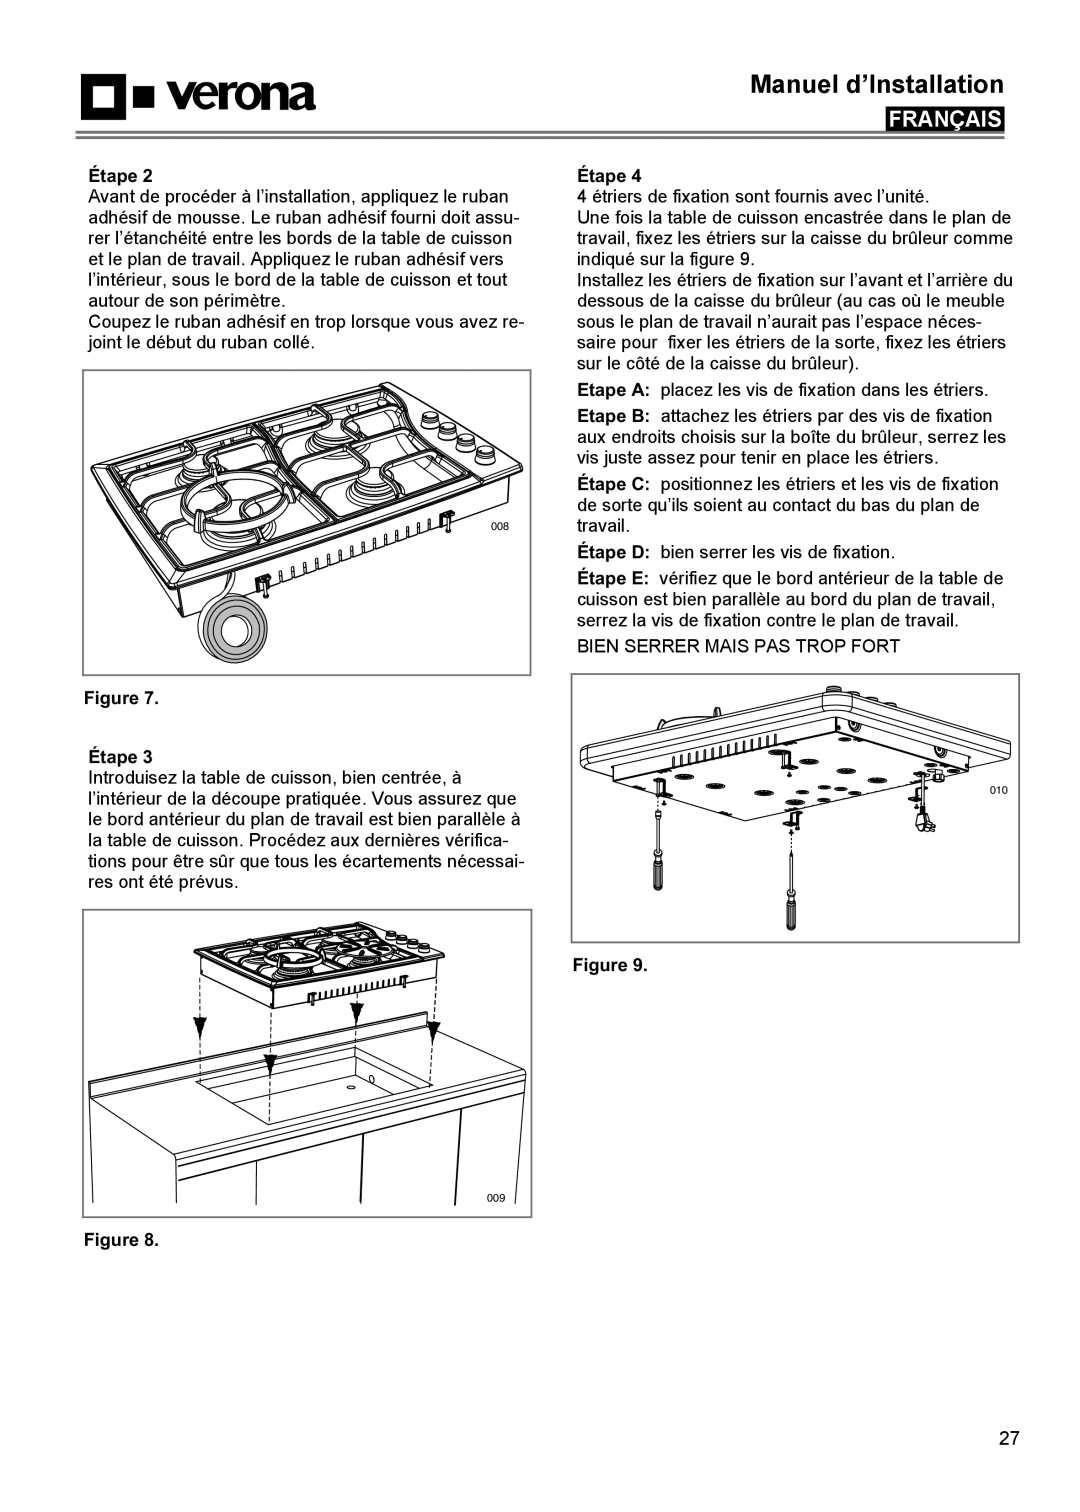 Verona VECTGMS304SS, VECTGMS365SS manual Manuel d’Installation, Français, Étape 